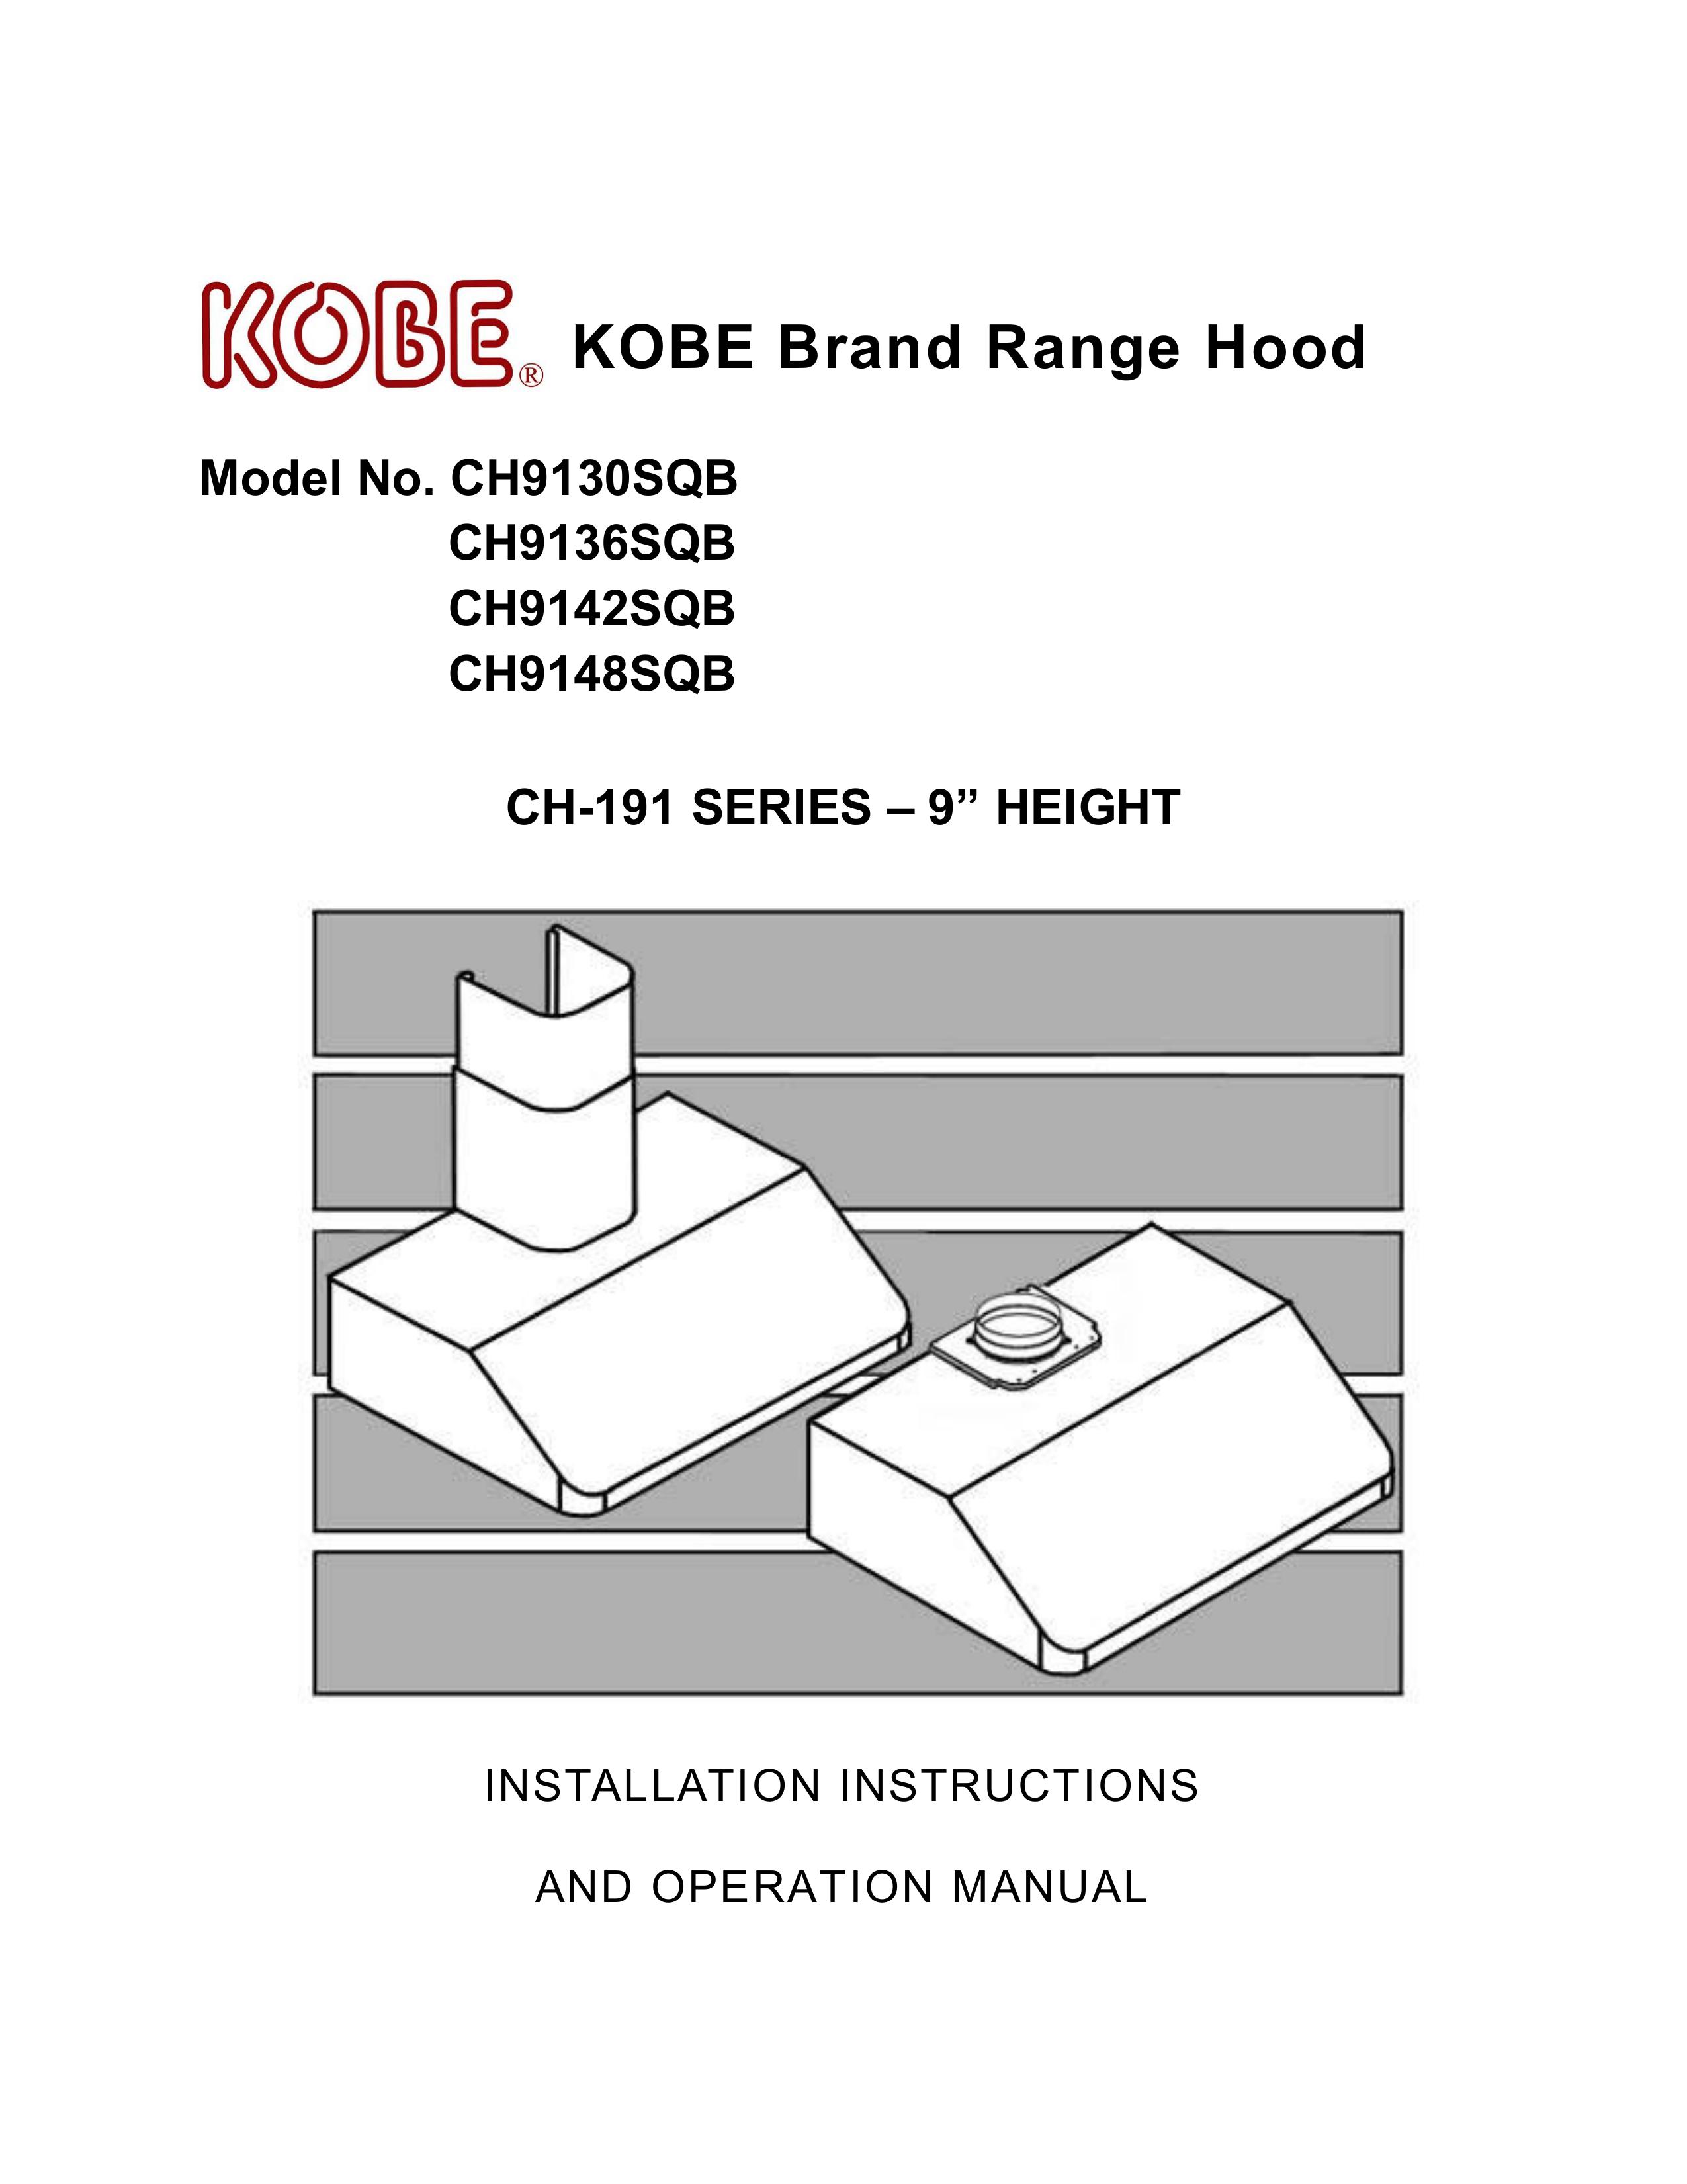 Kobe Range Hoods CH9148SQB Ventilation Hood User Manual